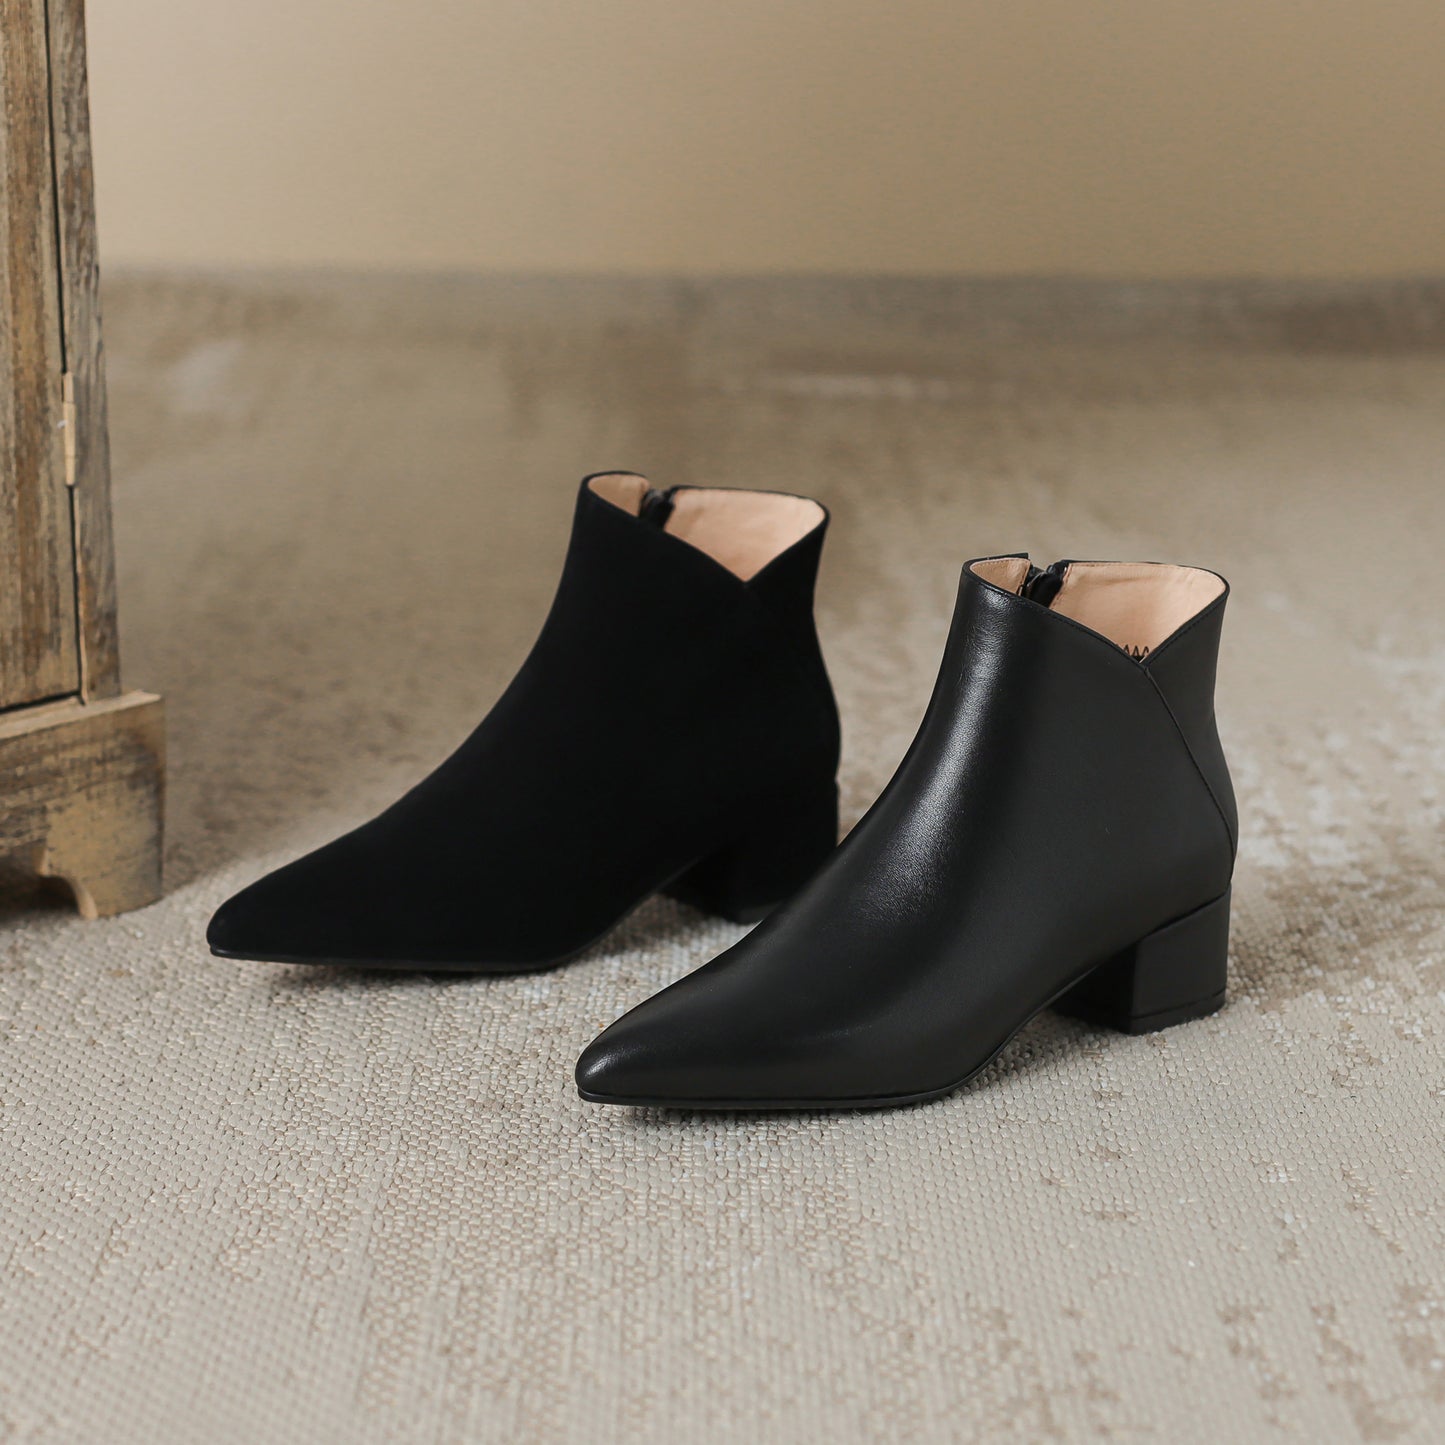 TinaCus Women's Handmade Leather Block Heel Side Zip Up Black Ankle Boots